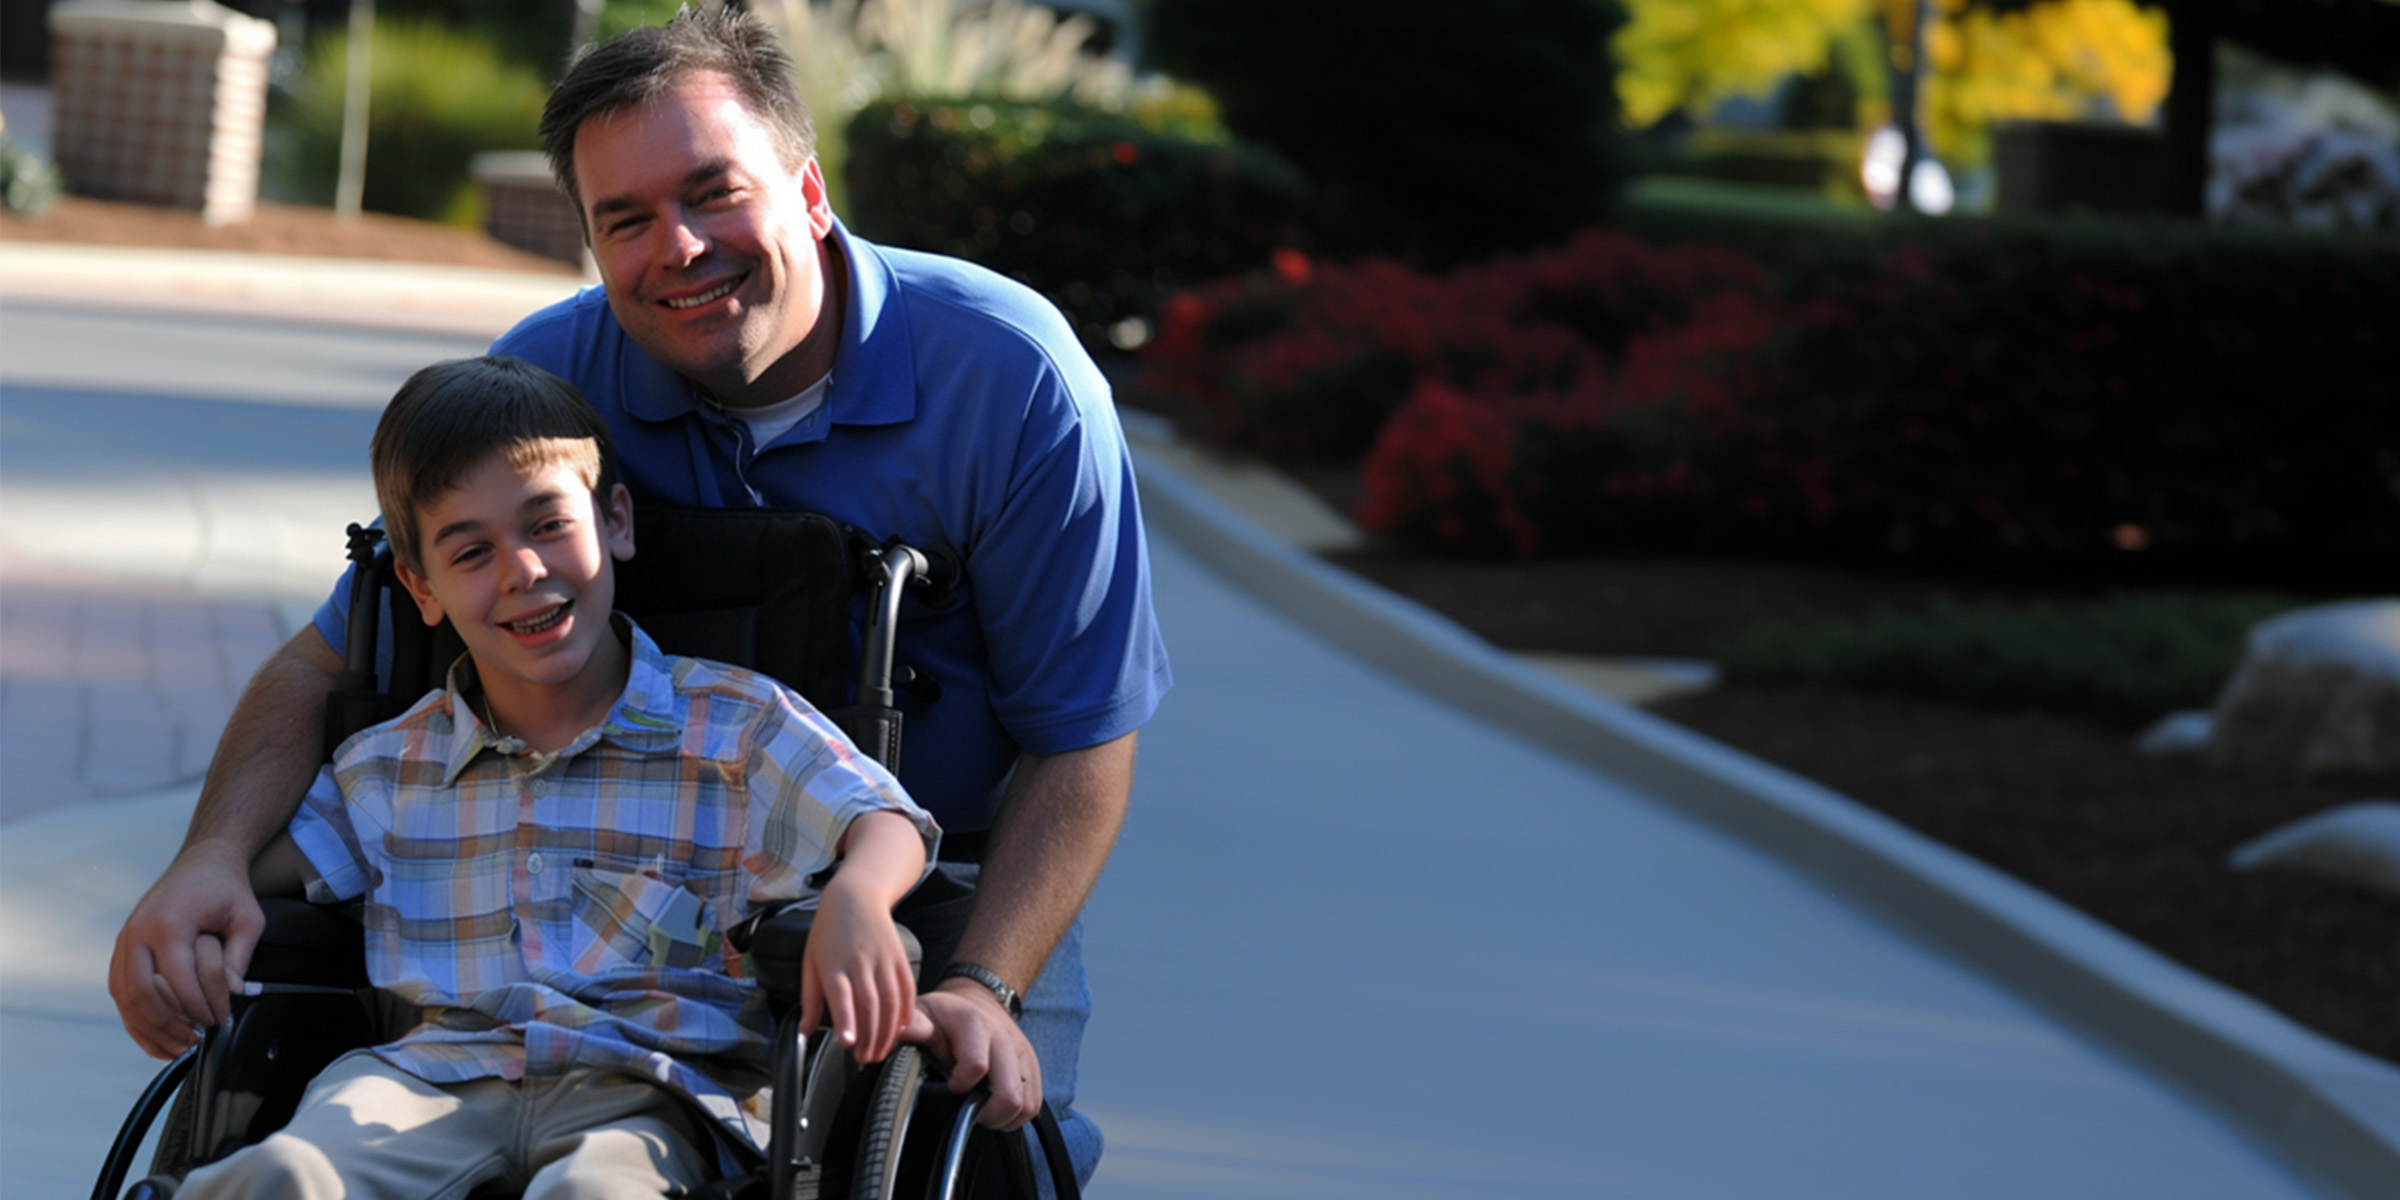 A man accompanying a boy in a wheelchair | Source: Amomama